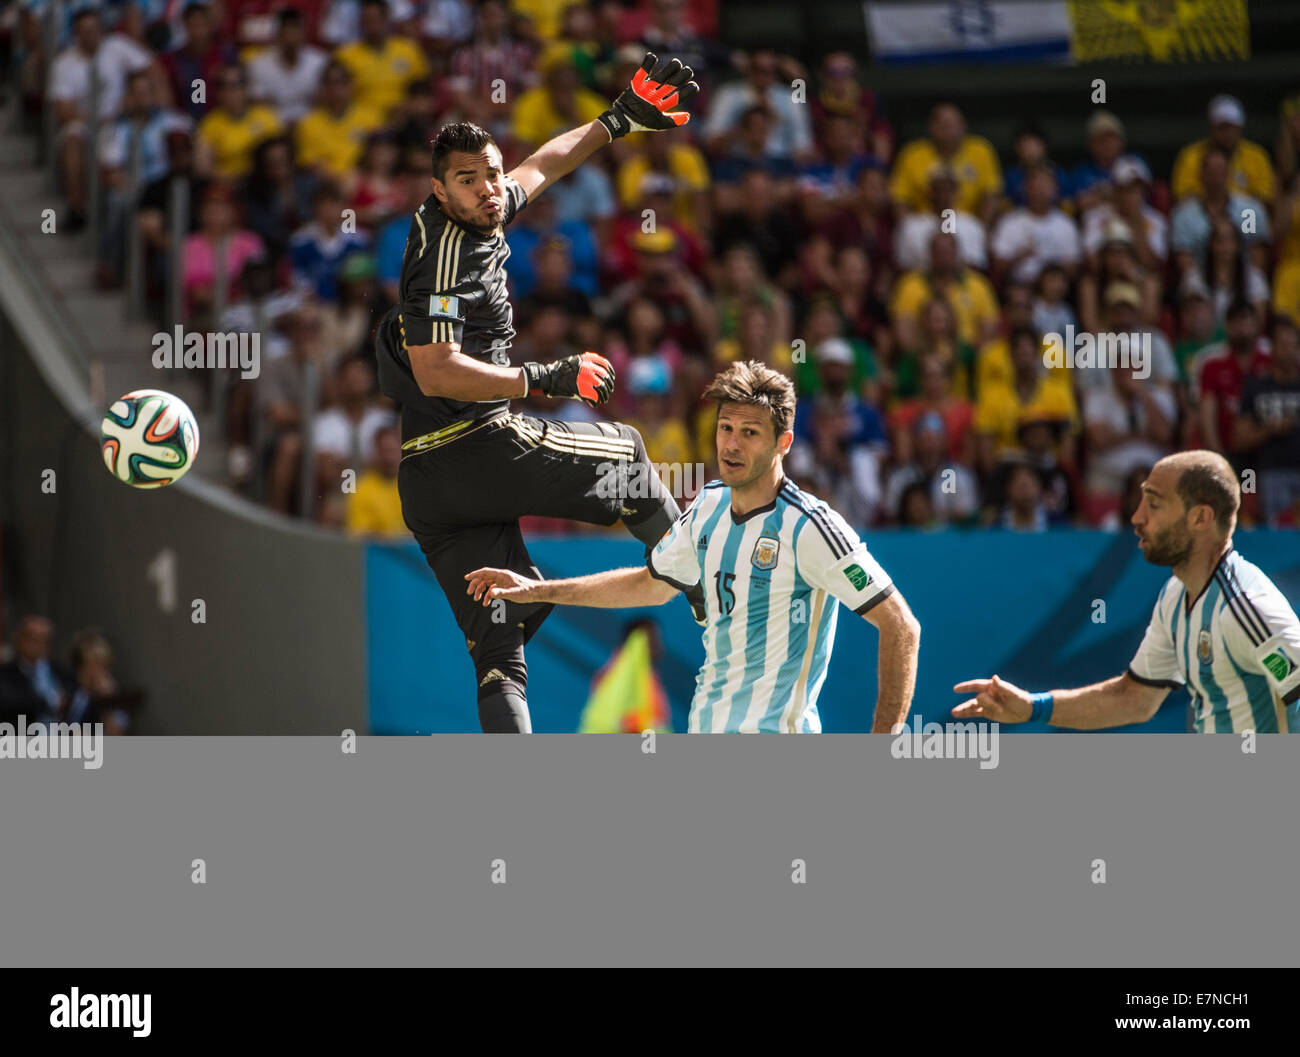 Sergio Romero and Martin Demichelis. Argentina v Belgium, quarter-final. FIFA World Cup 2014 Brazil. National stadium, Brasilia. Stock Photo